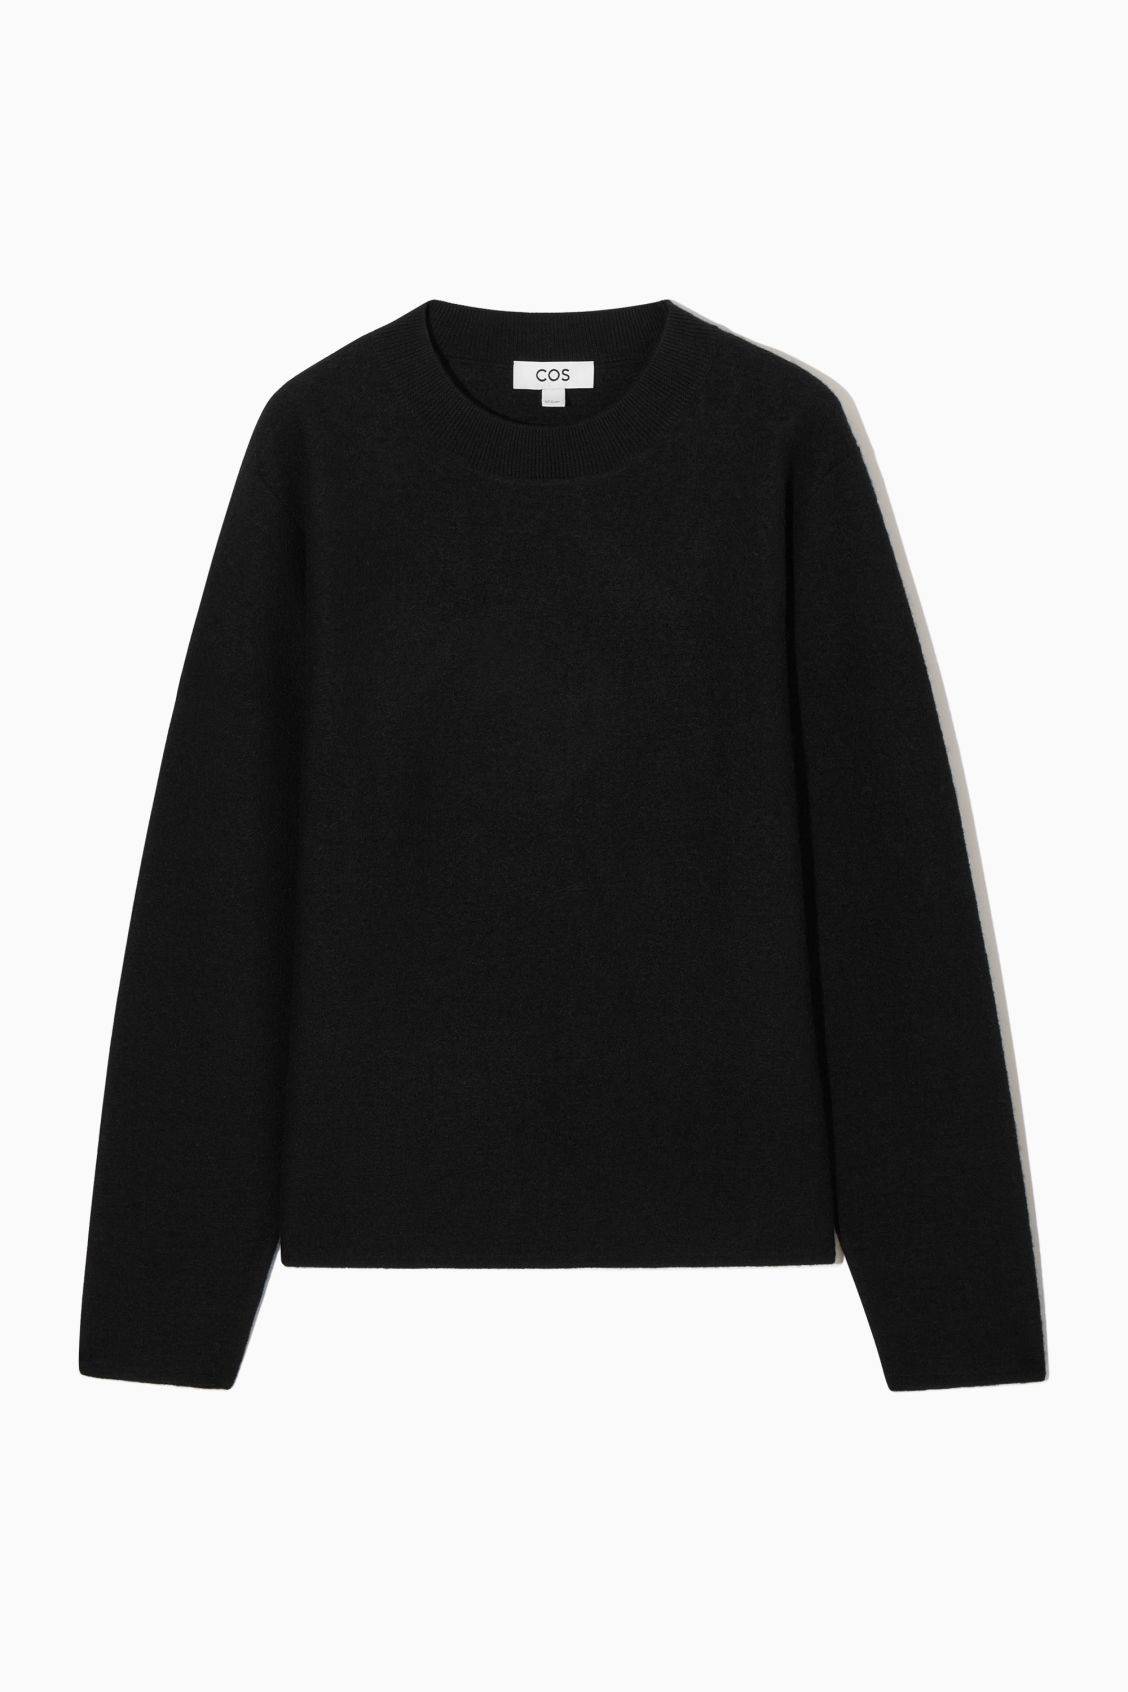 Czarny sweter COS